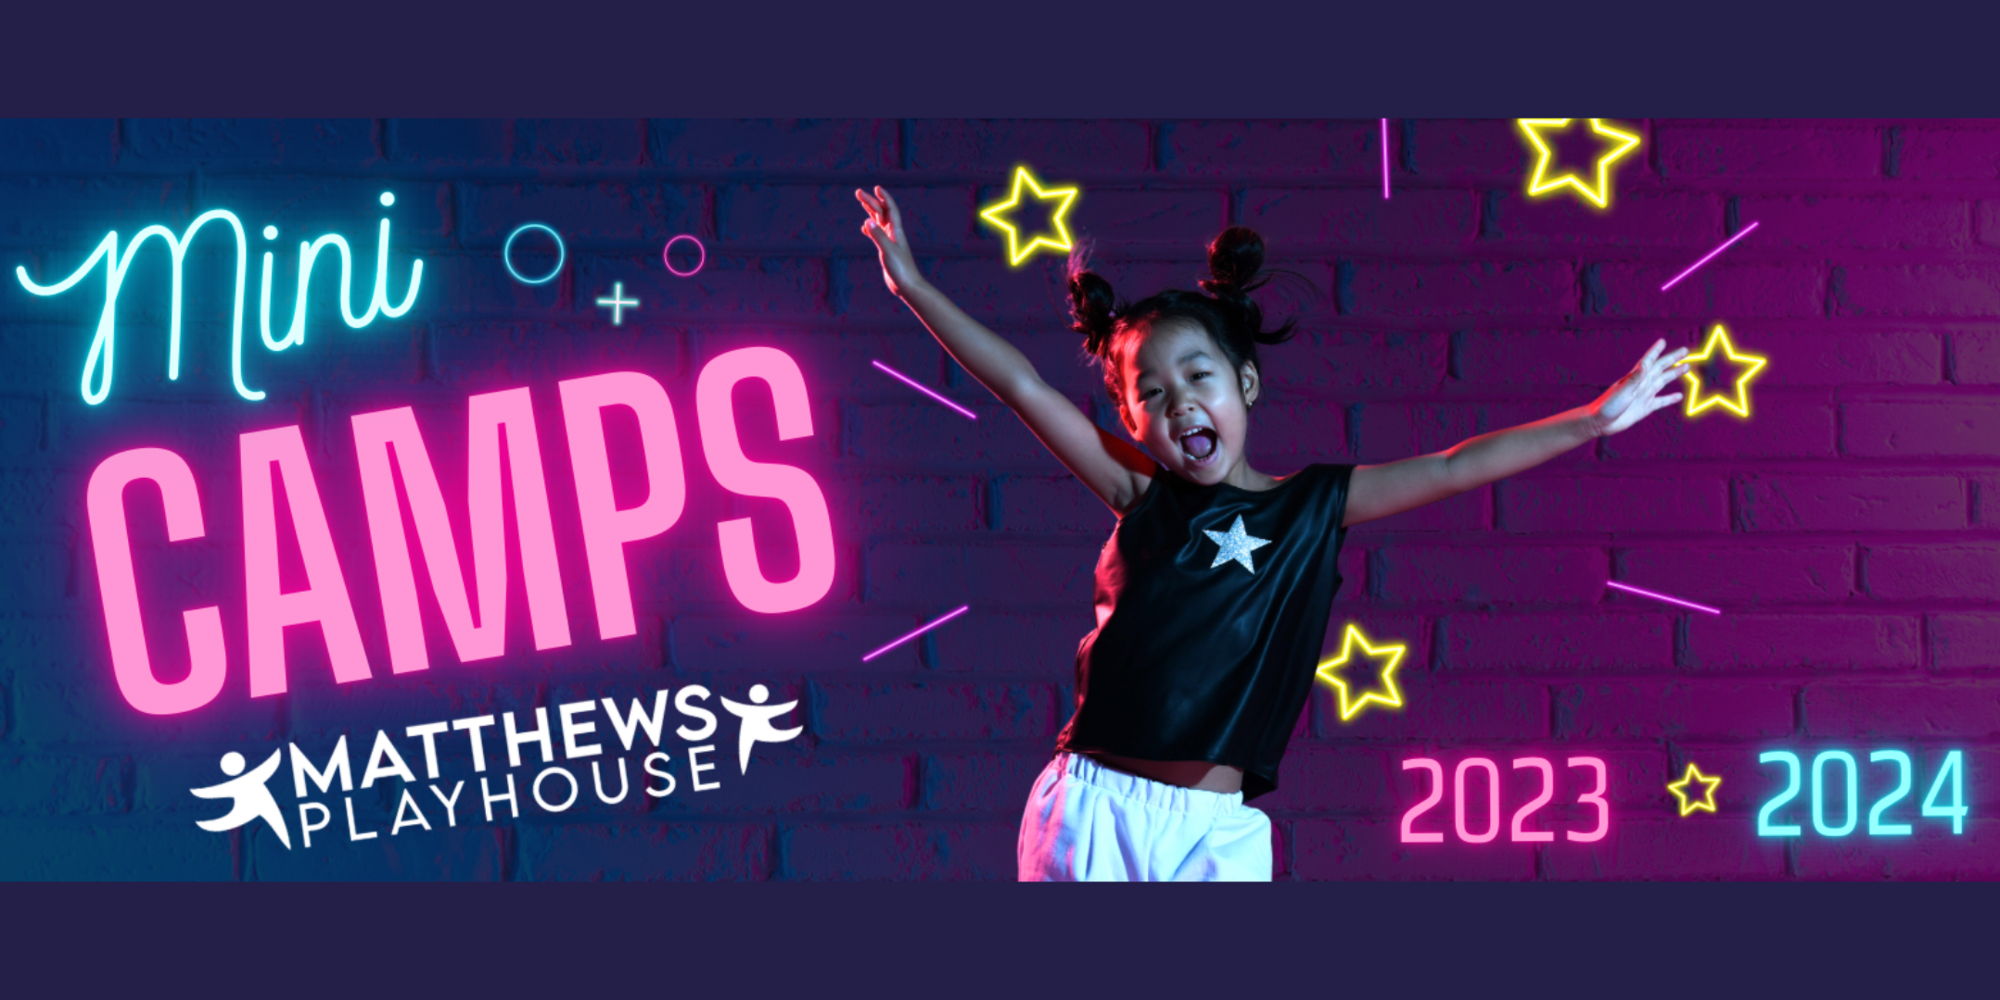 Matthews Playhouse 2023-2024 Teacher Workday Mini-Camps promotional image